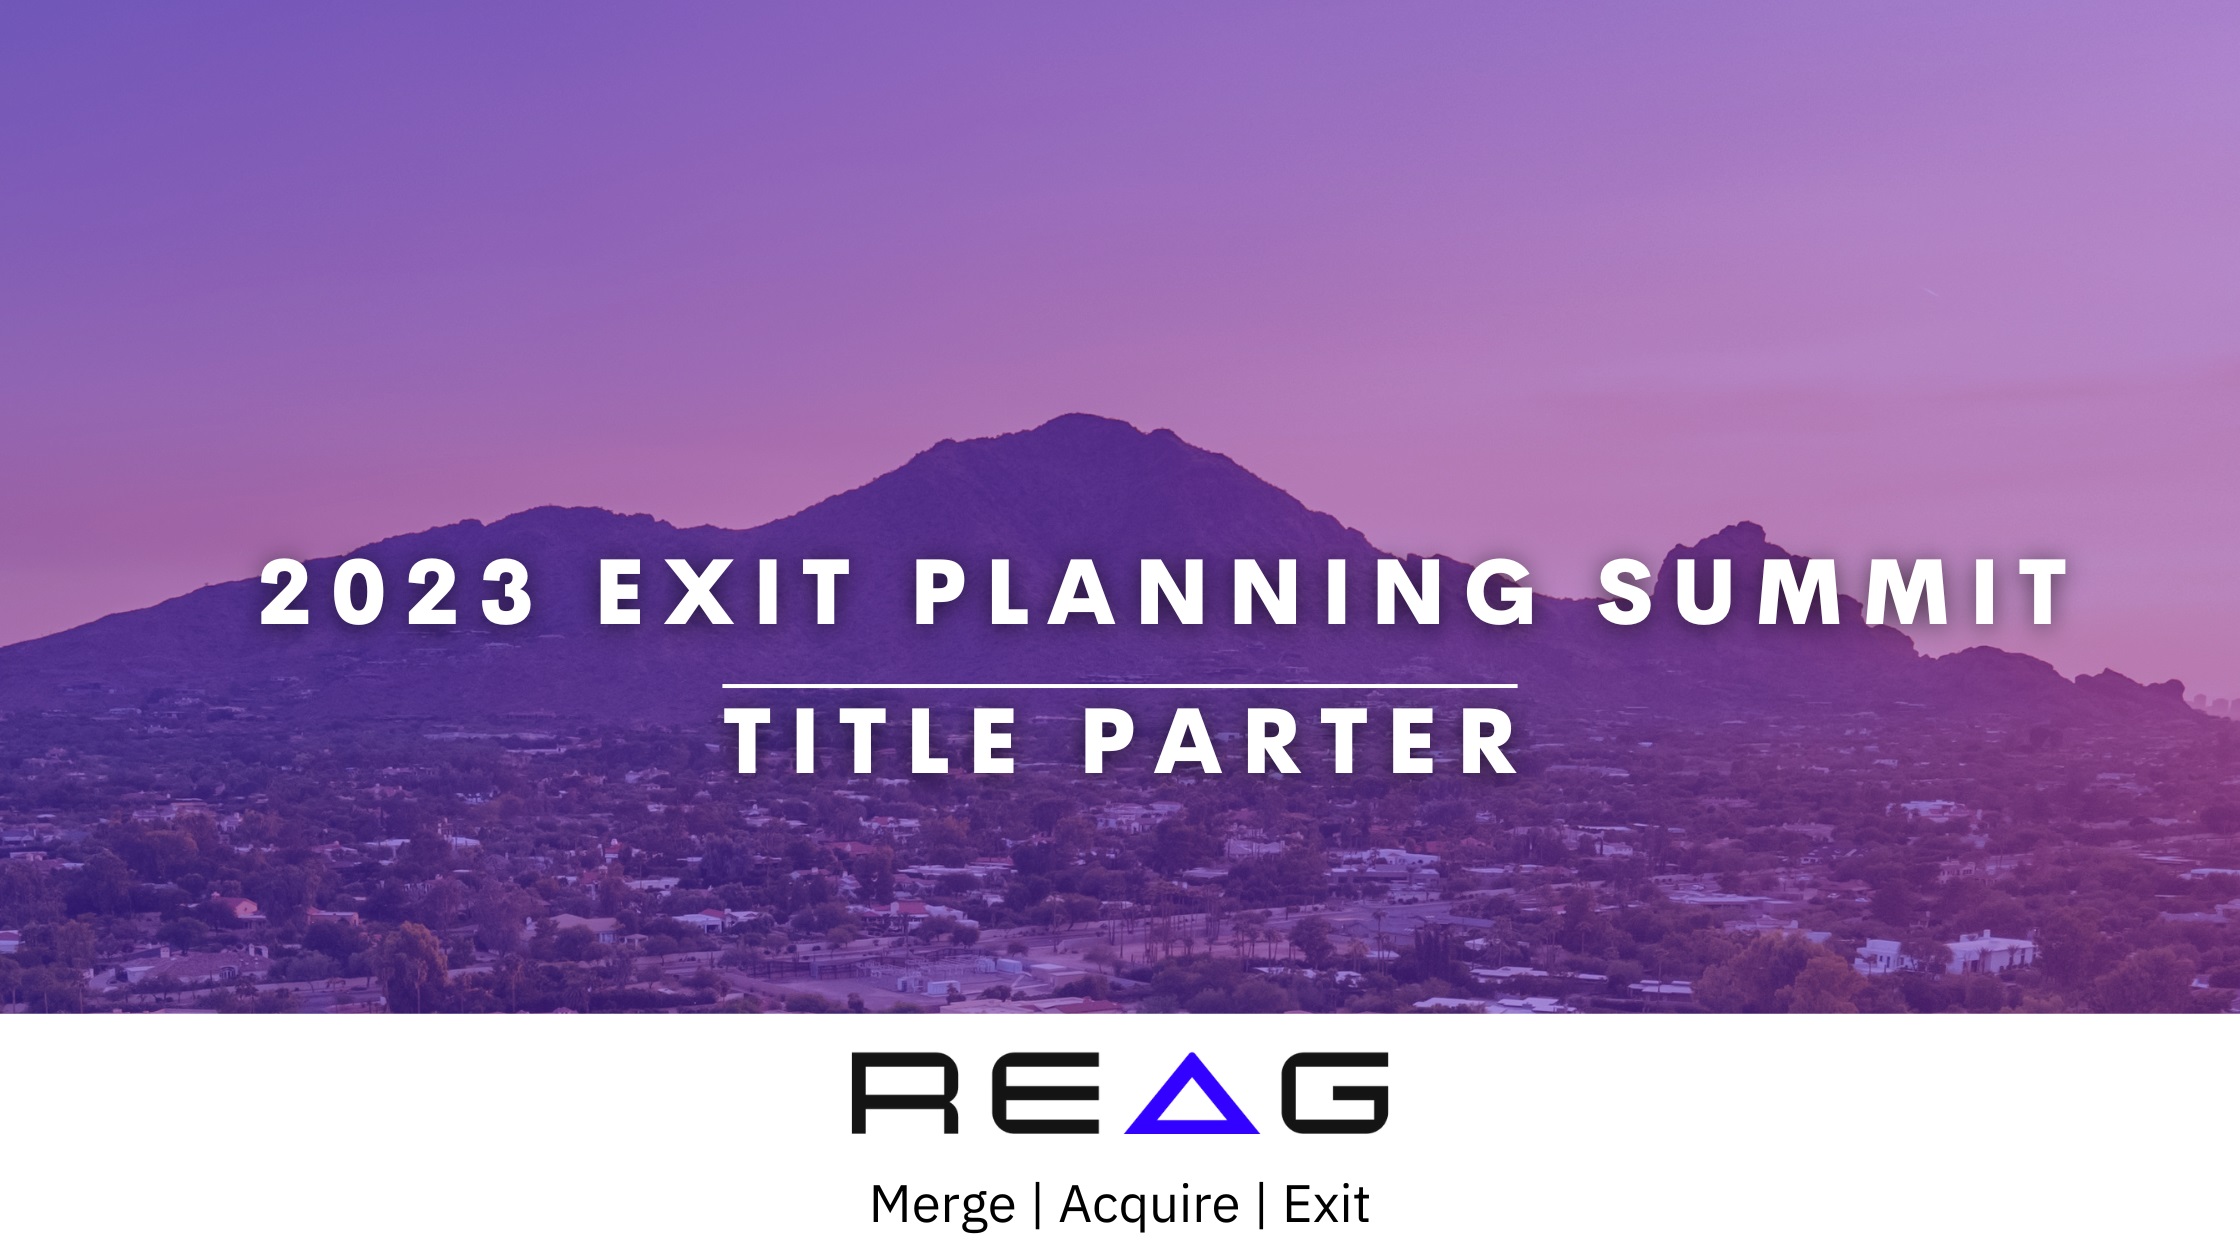 REAG is Title Partner of EPI’s 2023 Exit Planning Institute Summit